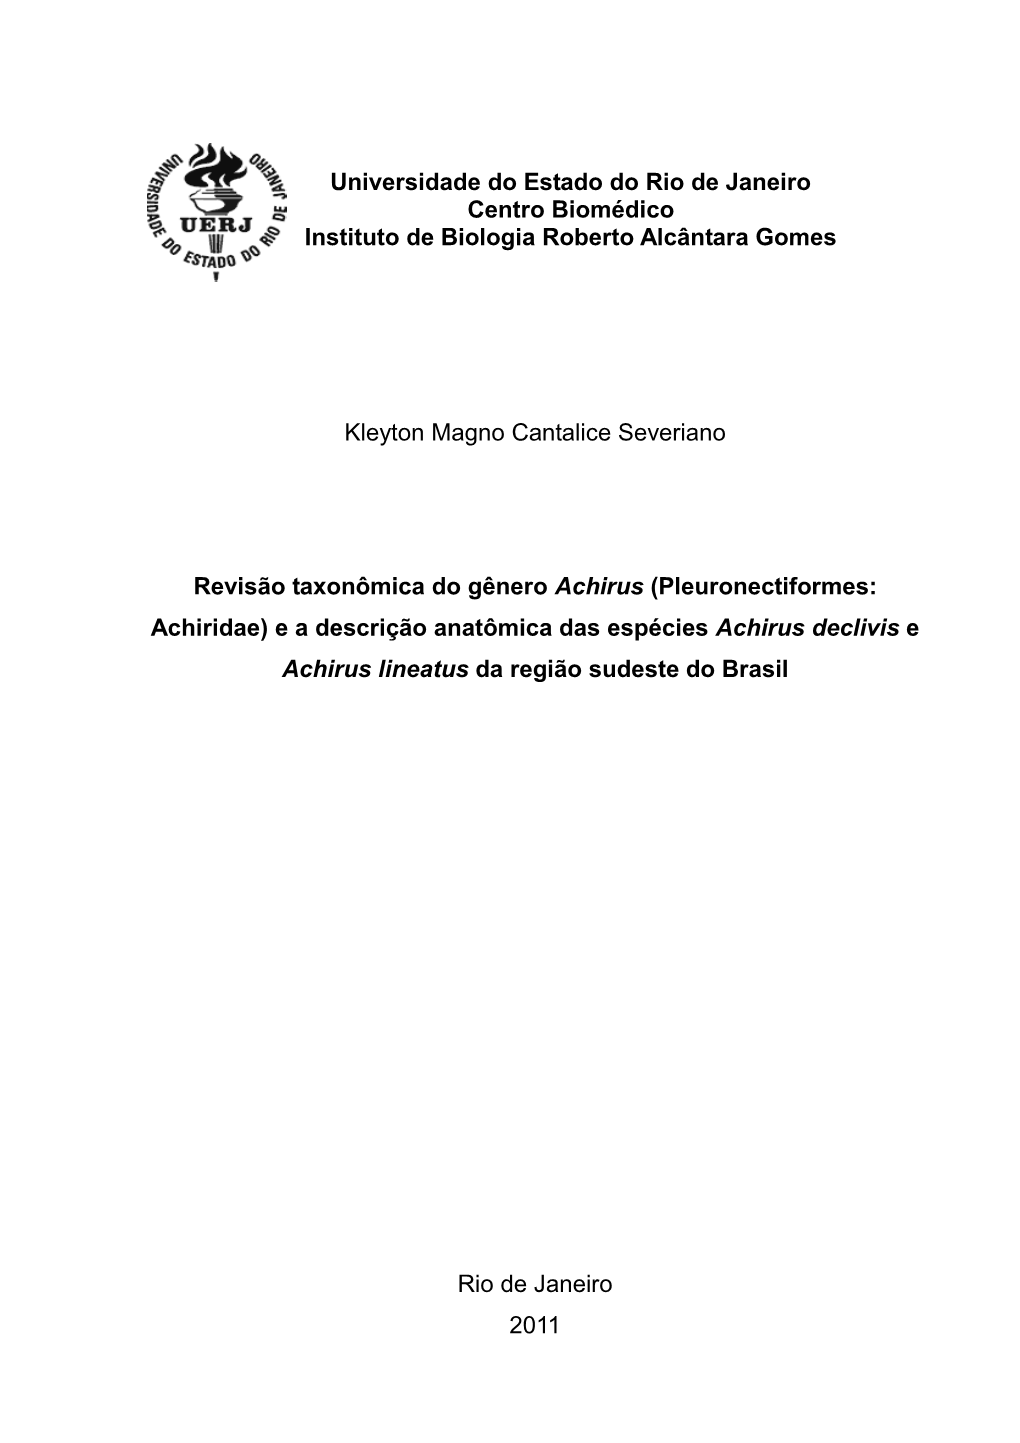 Kleyton Magno Cantalice Severiano Dissertacao Completa.Pdf